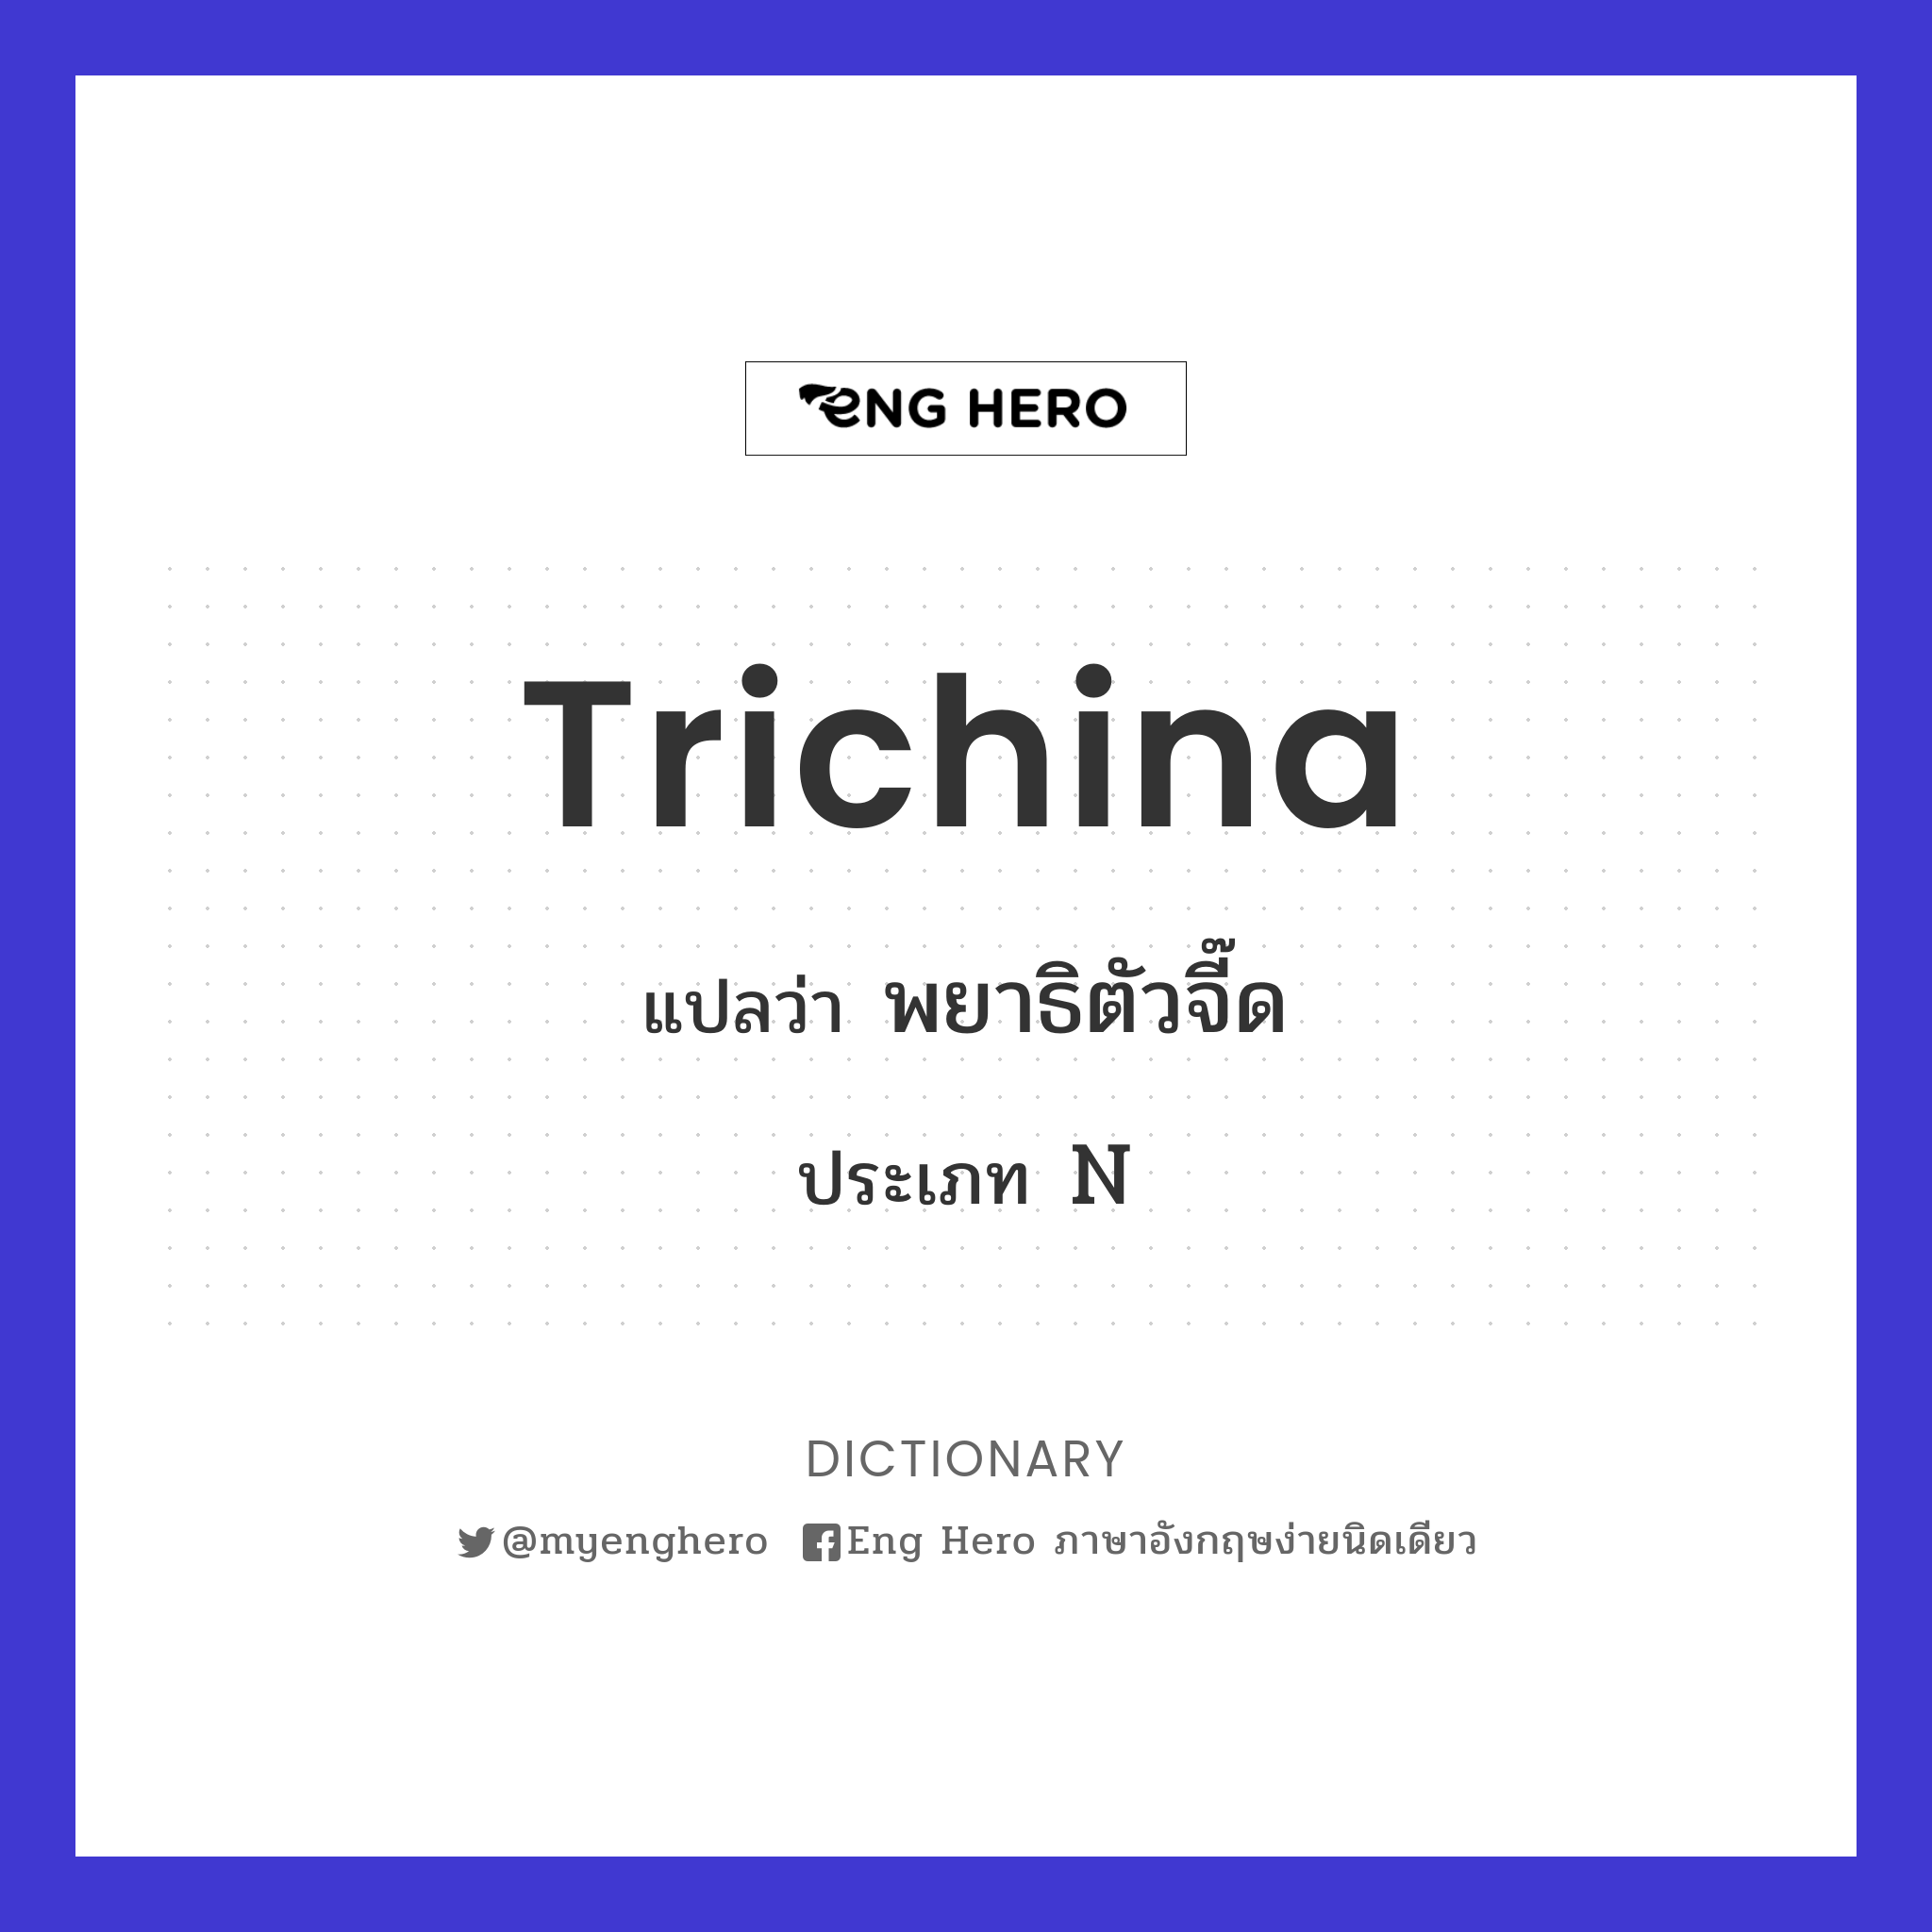 trichina